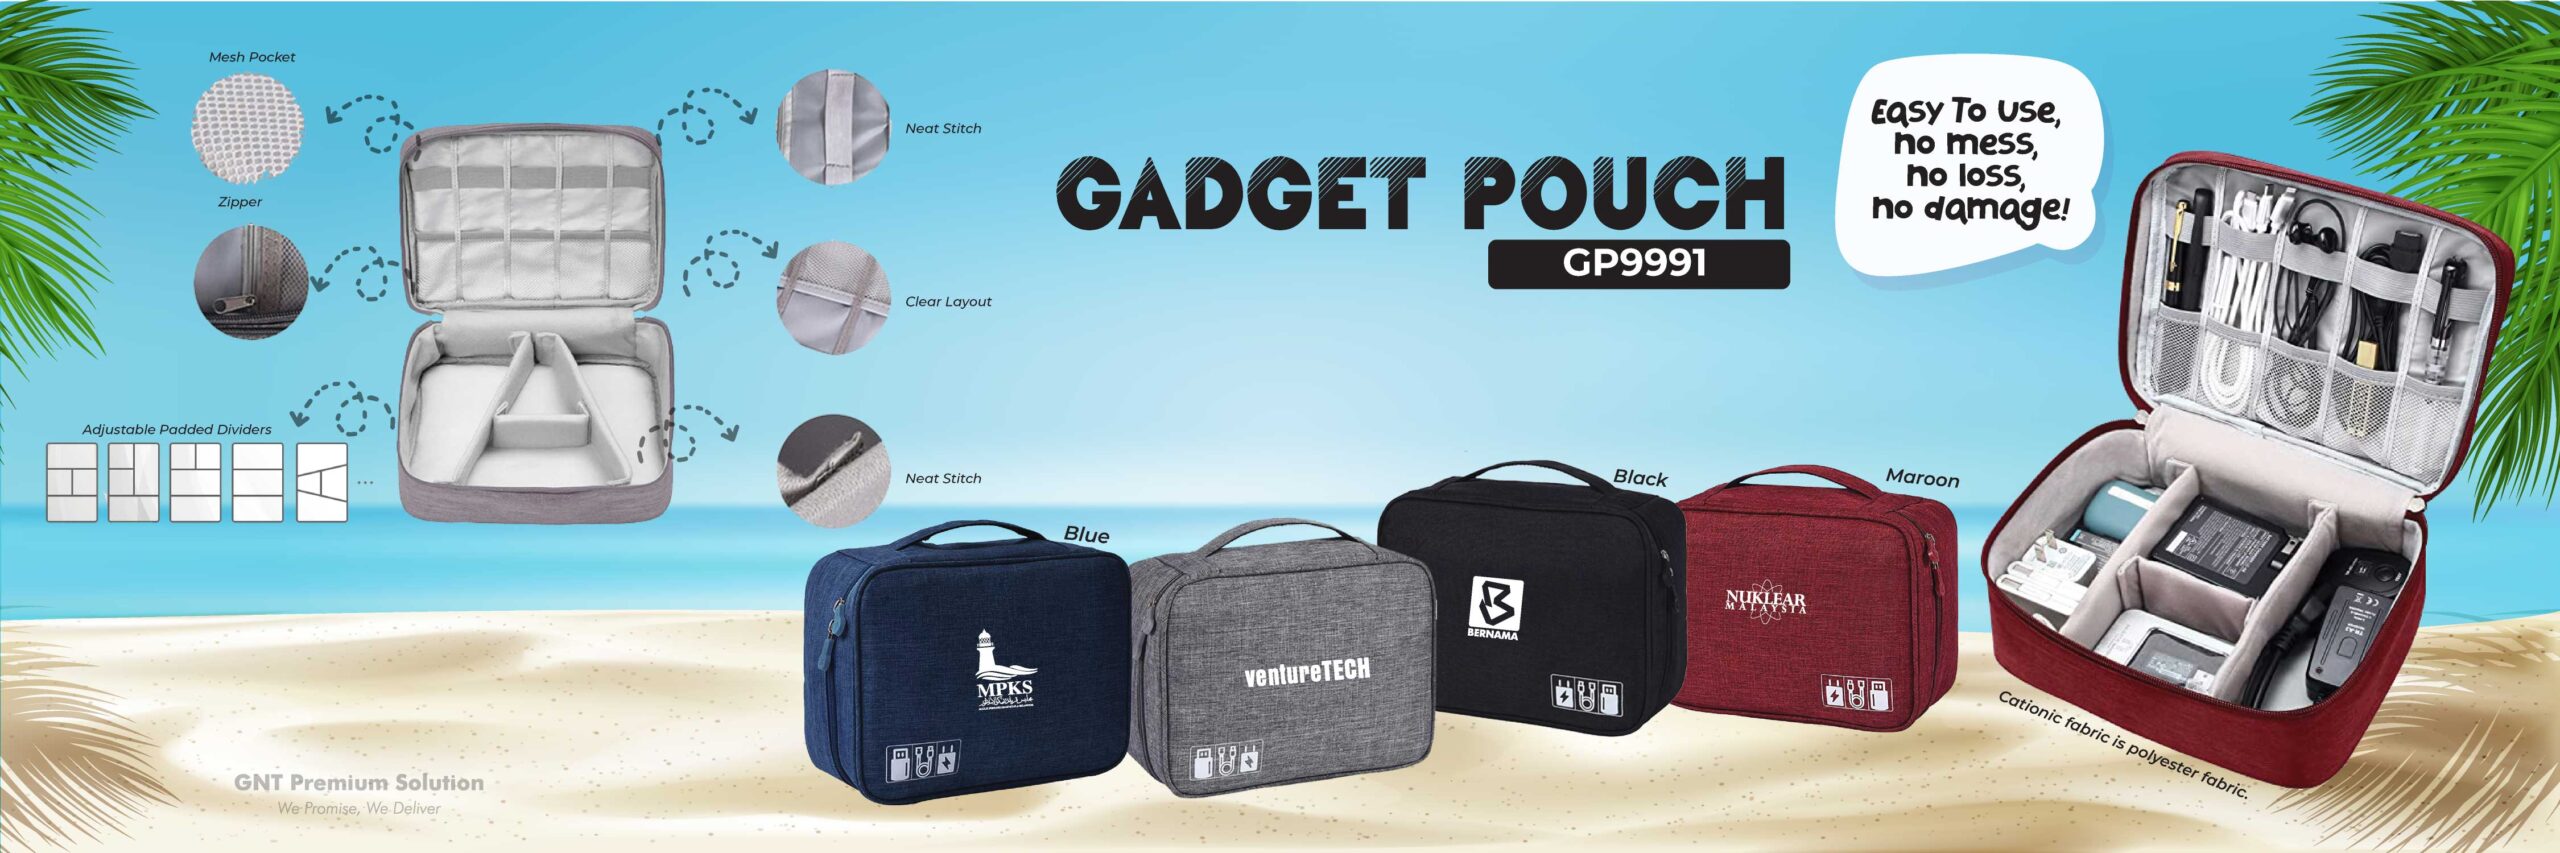 Gadget Pouch GP9991